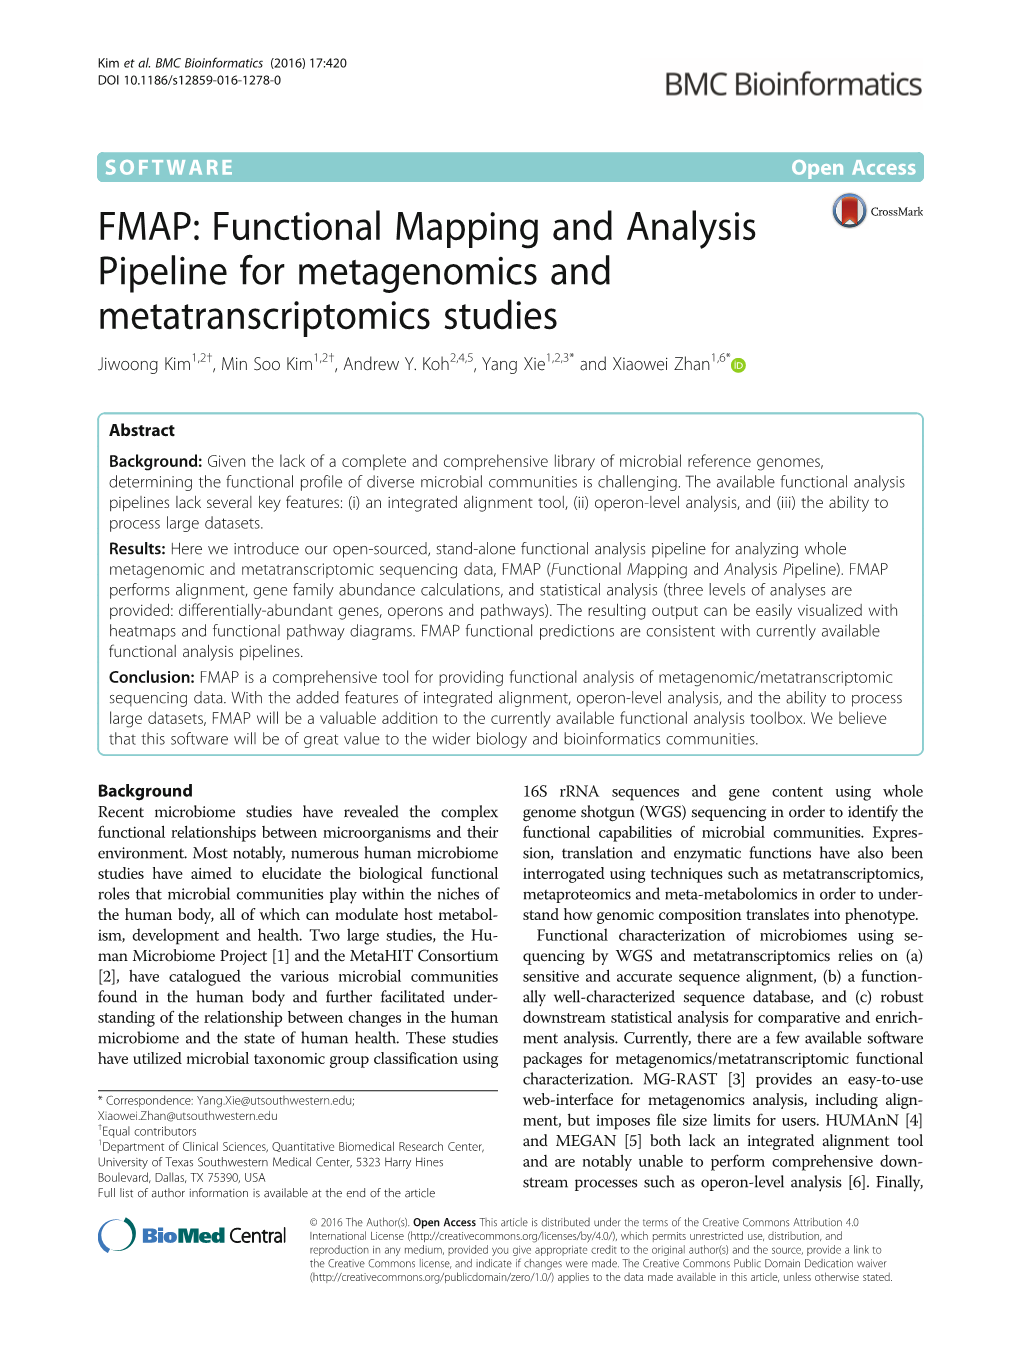 FMAP: Functional Mapping and Analysis Pipeline for Metagenomics and Metatranscriptomics Studies Jiwoong Kim1,2†, Min Soo Kim1,2†, Andrew Y